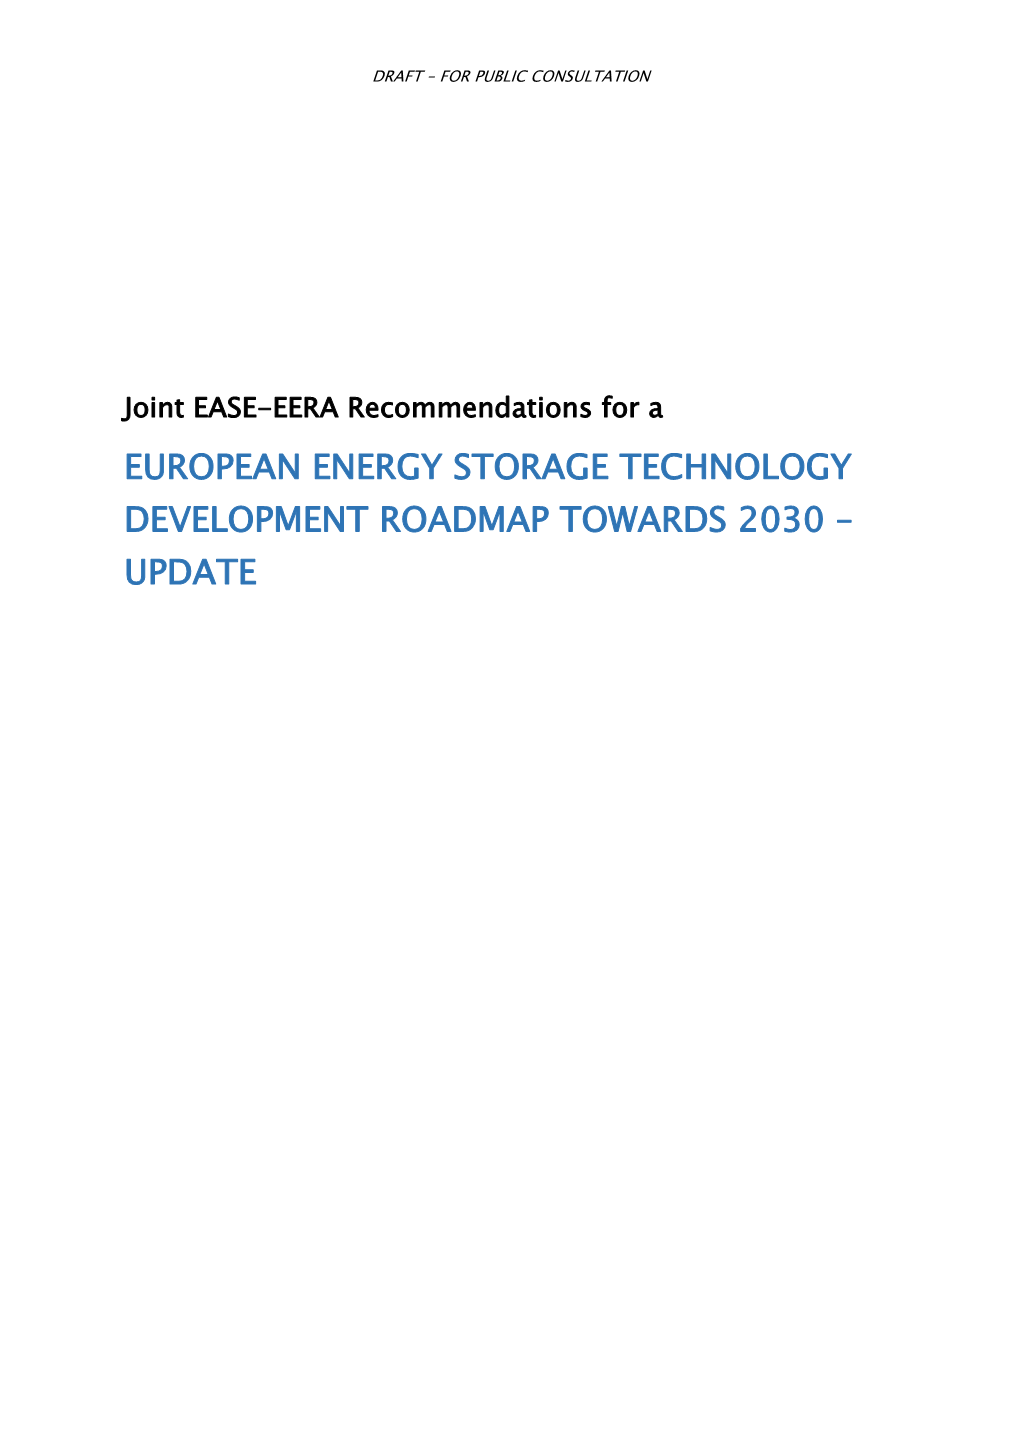 European Energy Storage Technology Development Roadmap Towards 2030 – Update